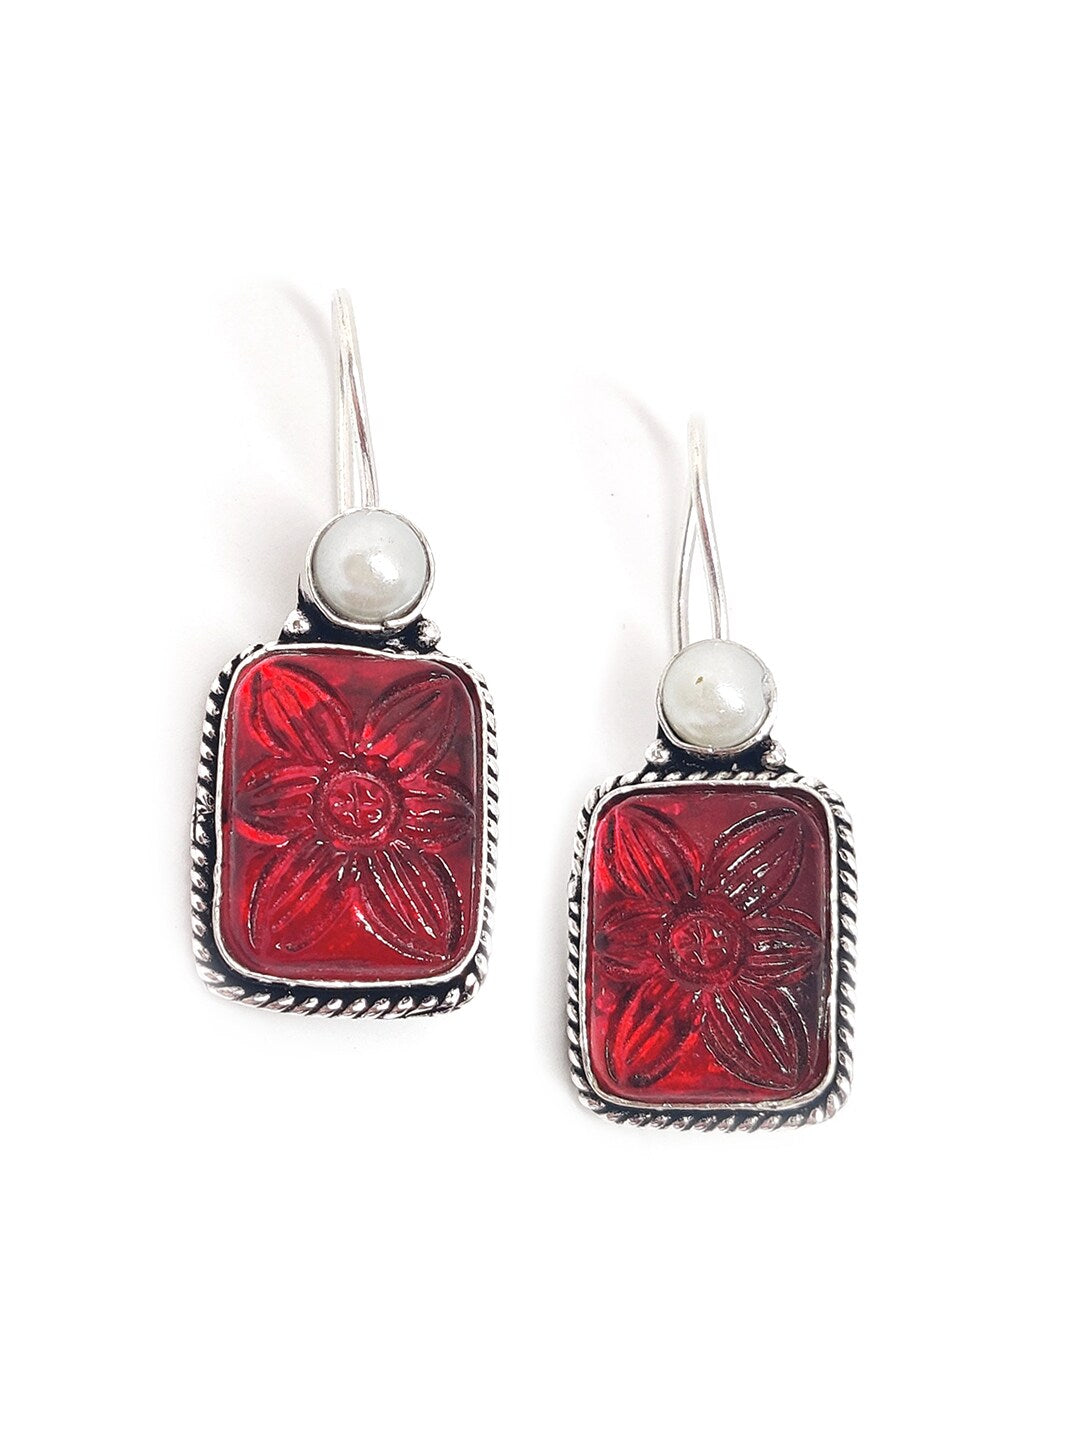 EL REGALO Red Geometric Drop Earrings - for Women and Girls
Style ID: 16851564